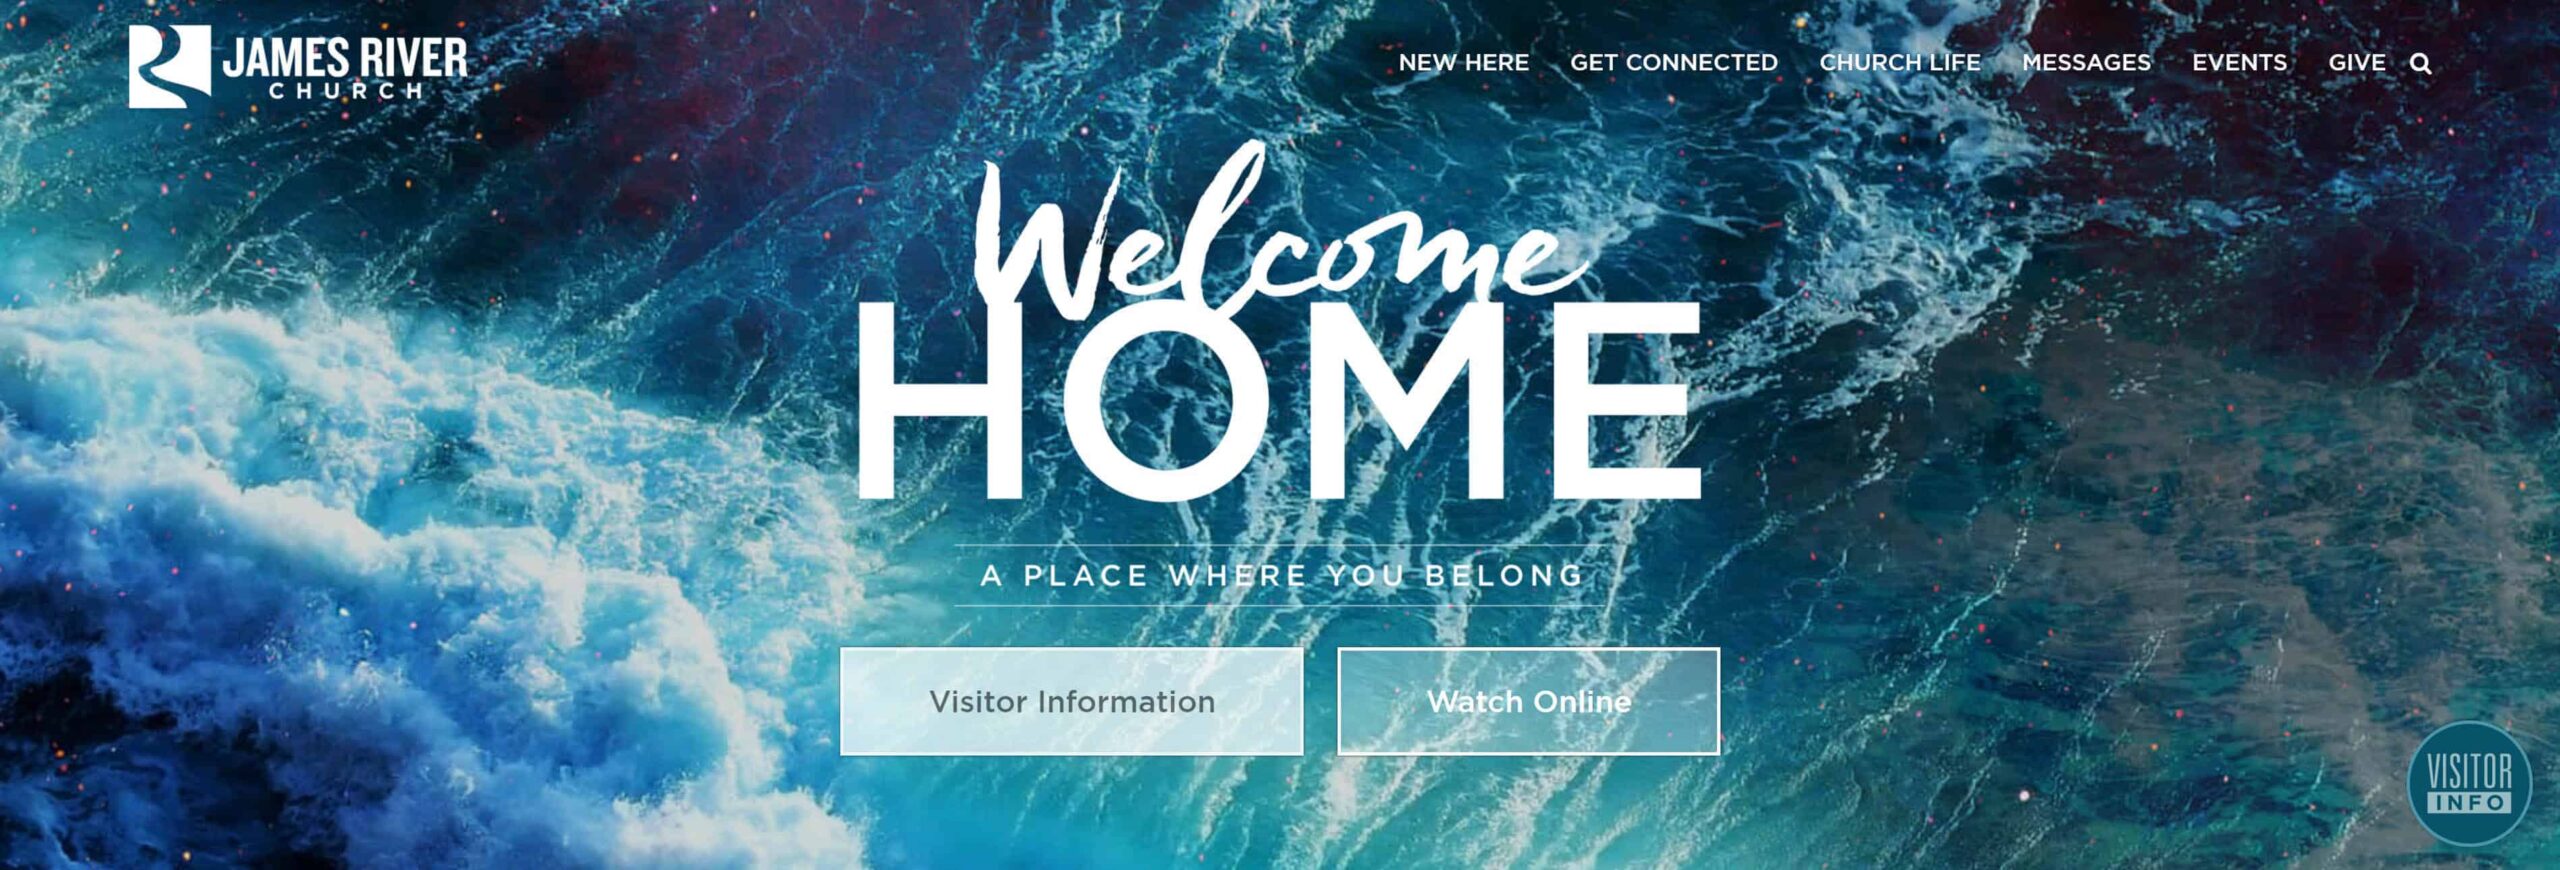 Church Website Homepage - James River